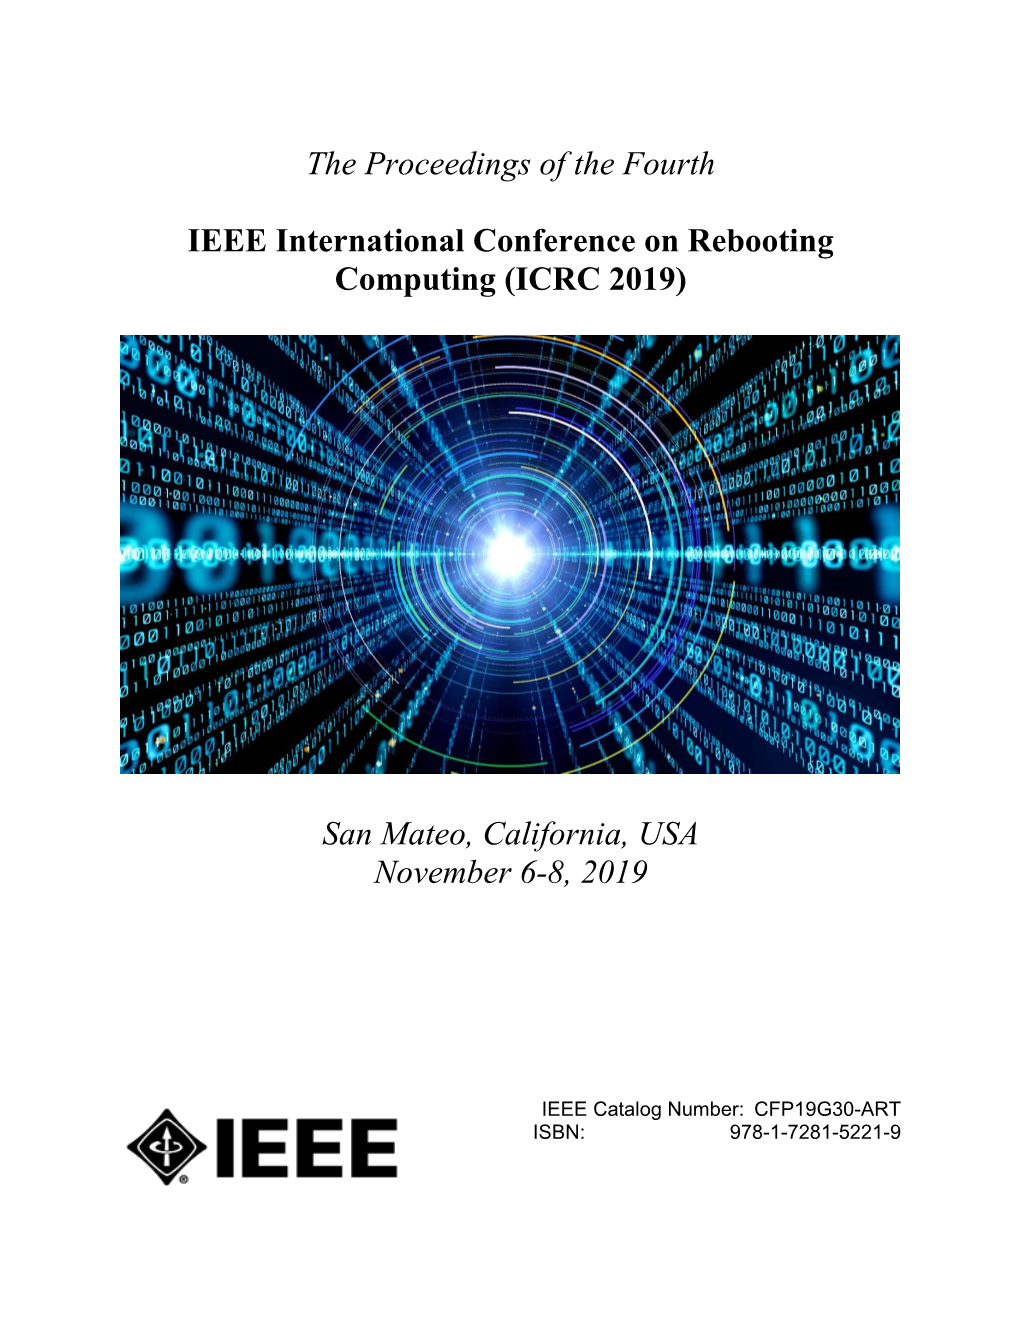 The Proceedings of the Fourth IEEE International Conference on Rebooting Computing (ICRC 2019) San Mateo, California, USA Novemb